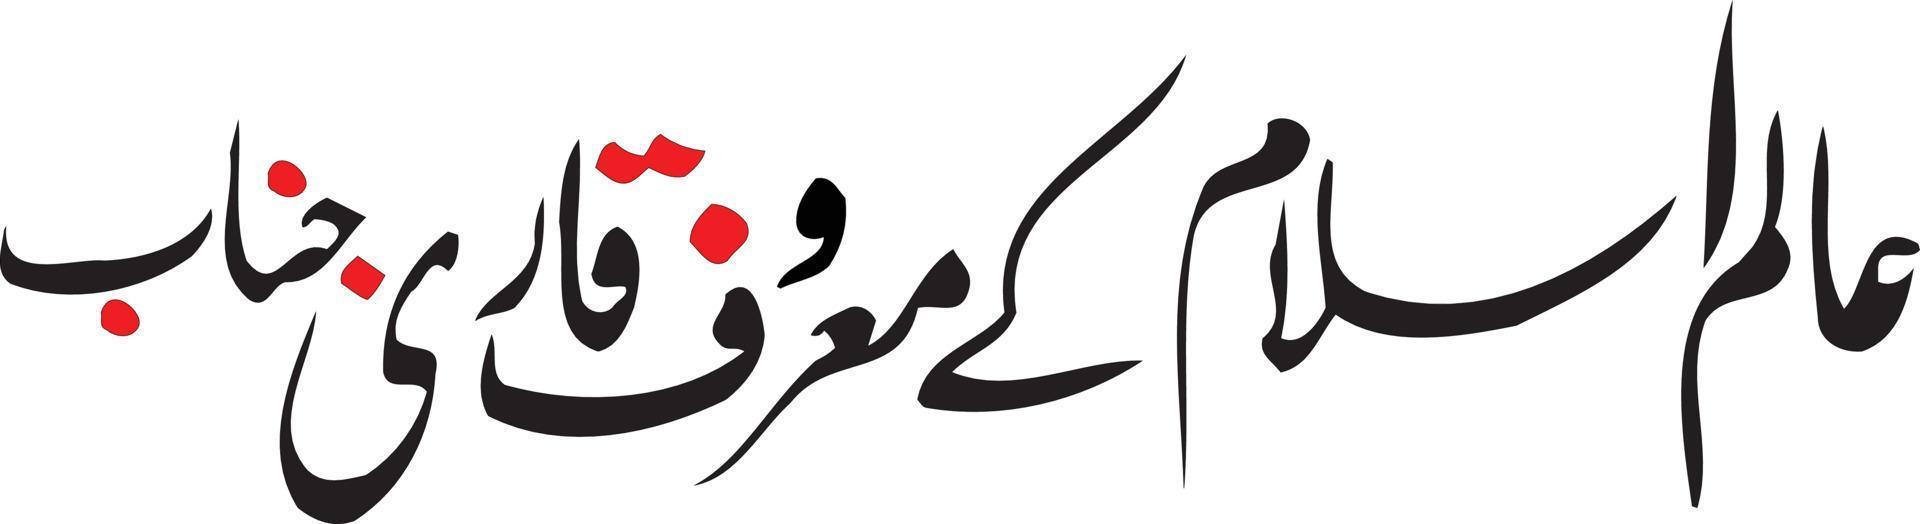 alem isalam clave maroof qari jnab islámico urdu caligrafía vector libre